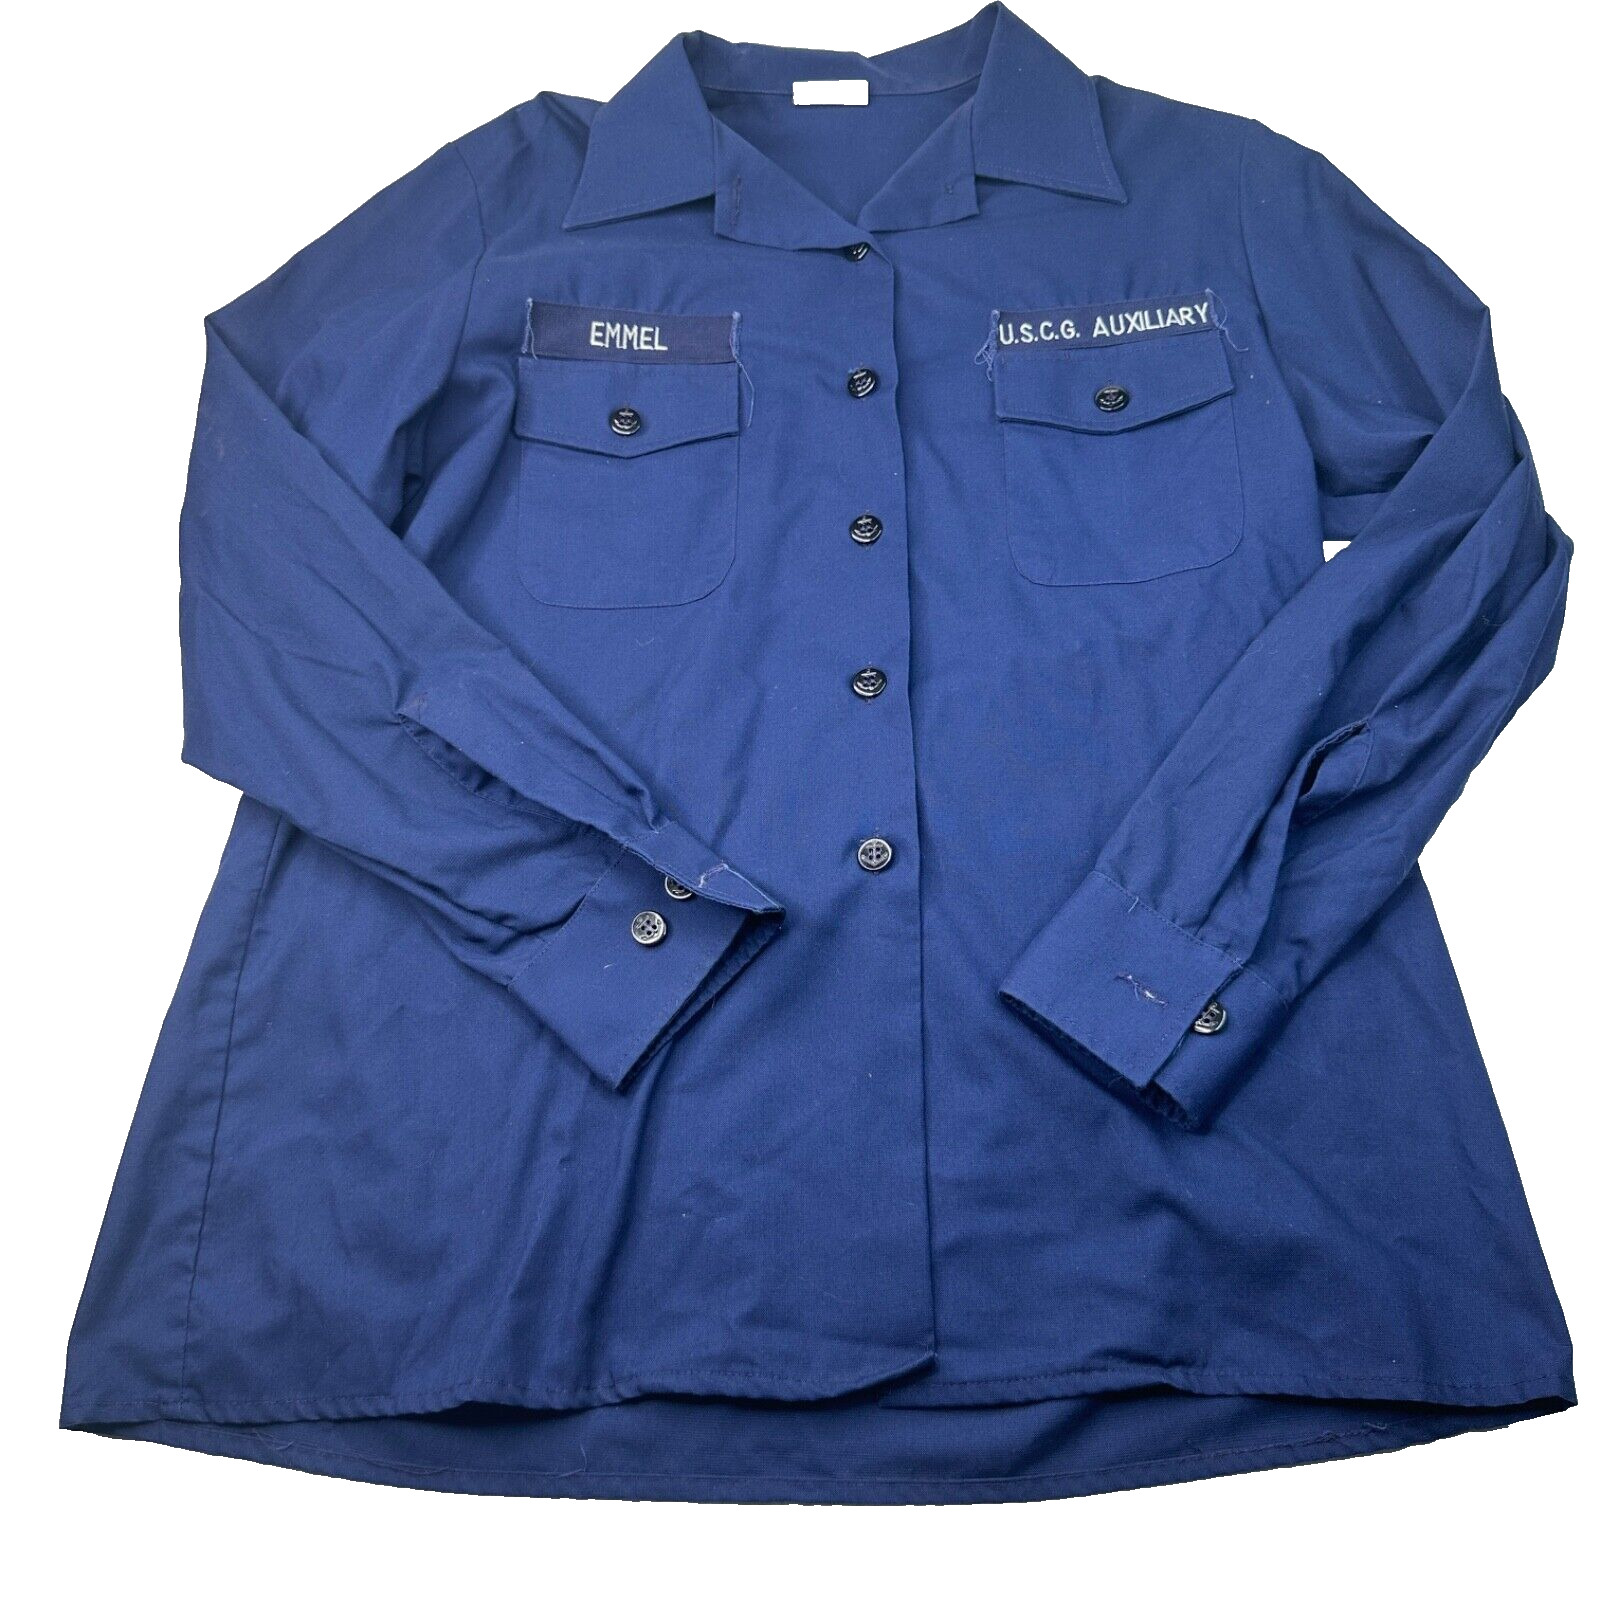 USCG Auxiliary Uniform Shirt Size L 32-33 SL Chest 44 Long Sleeves U.S.A